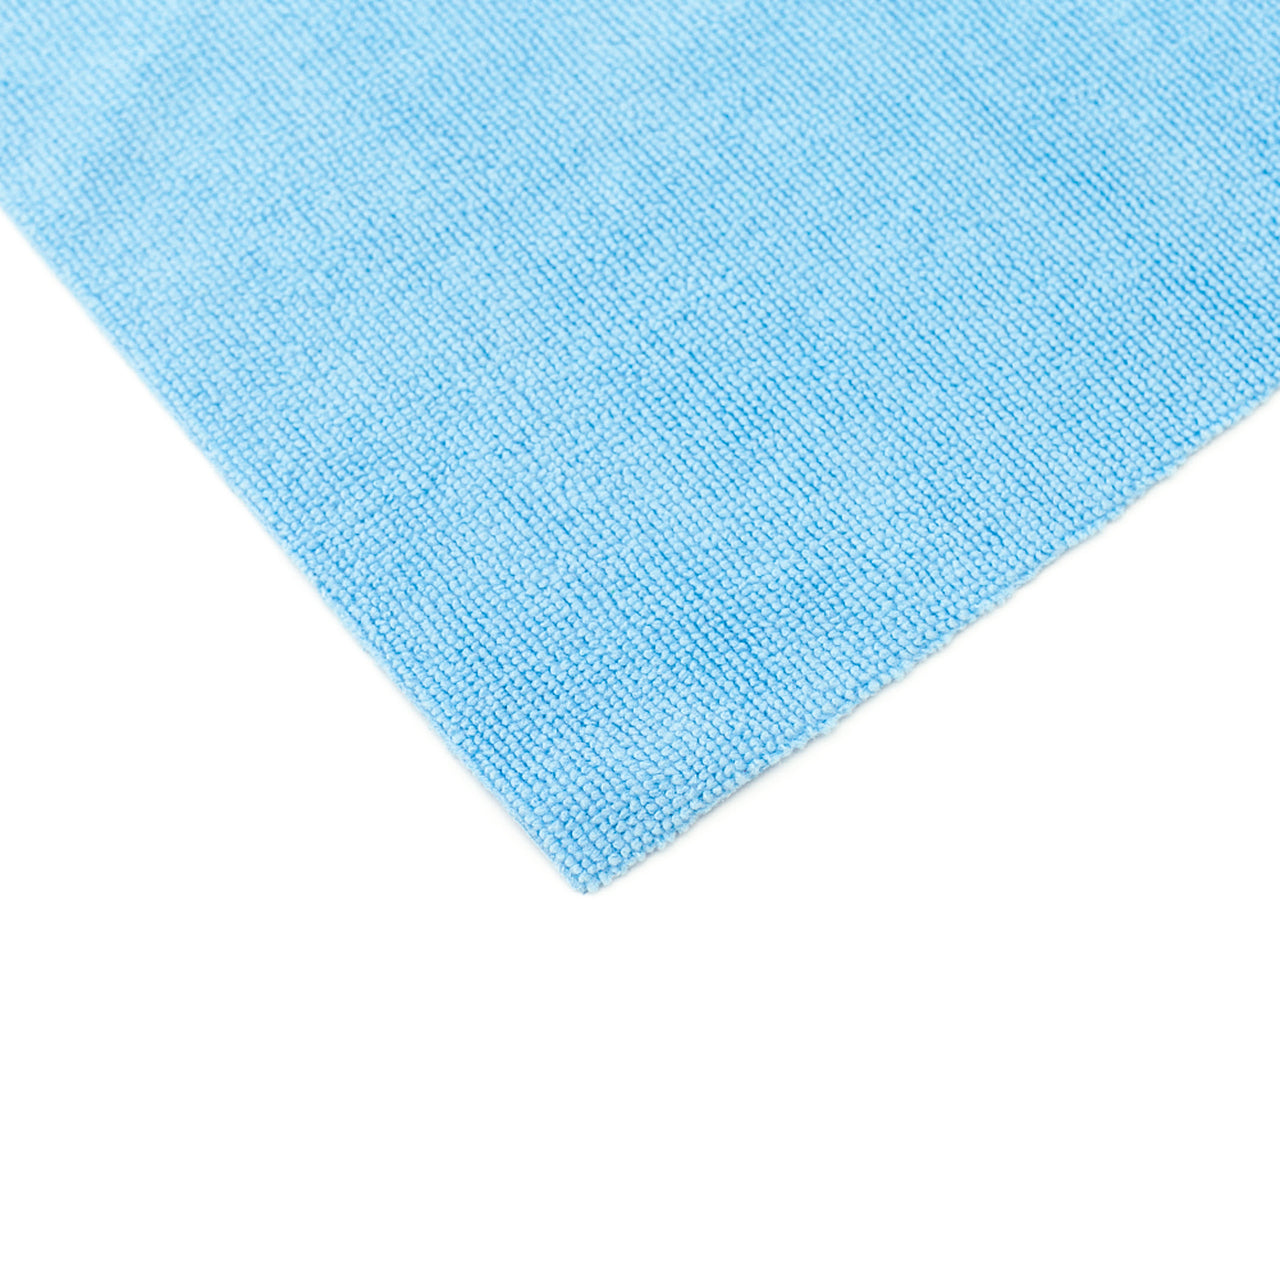 The Rag Company Edgeless 245 All-Purpose 16 x 16 Microfiber Terry Towel - Light Blue